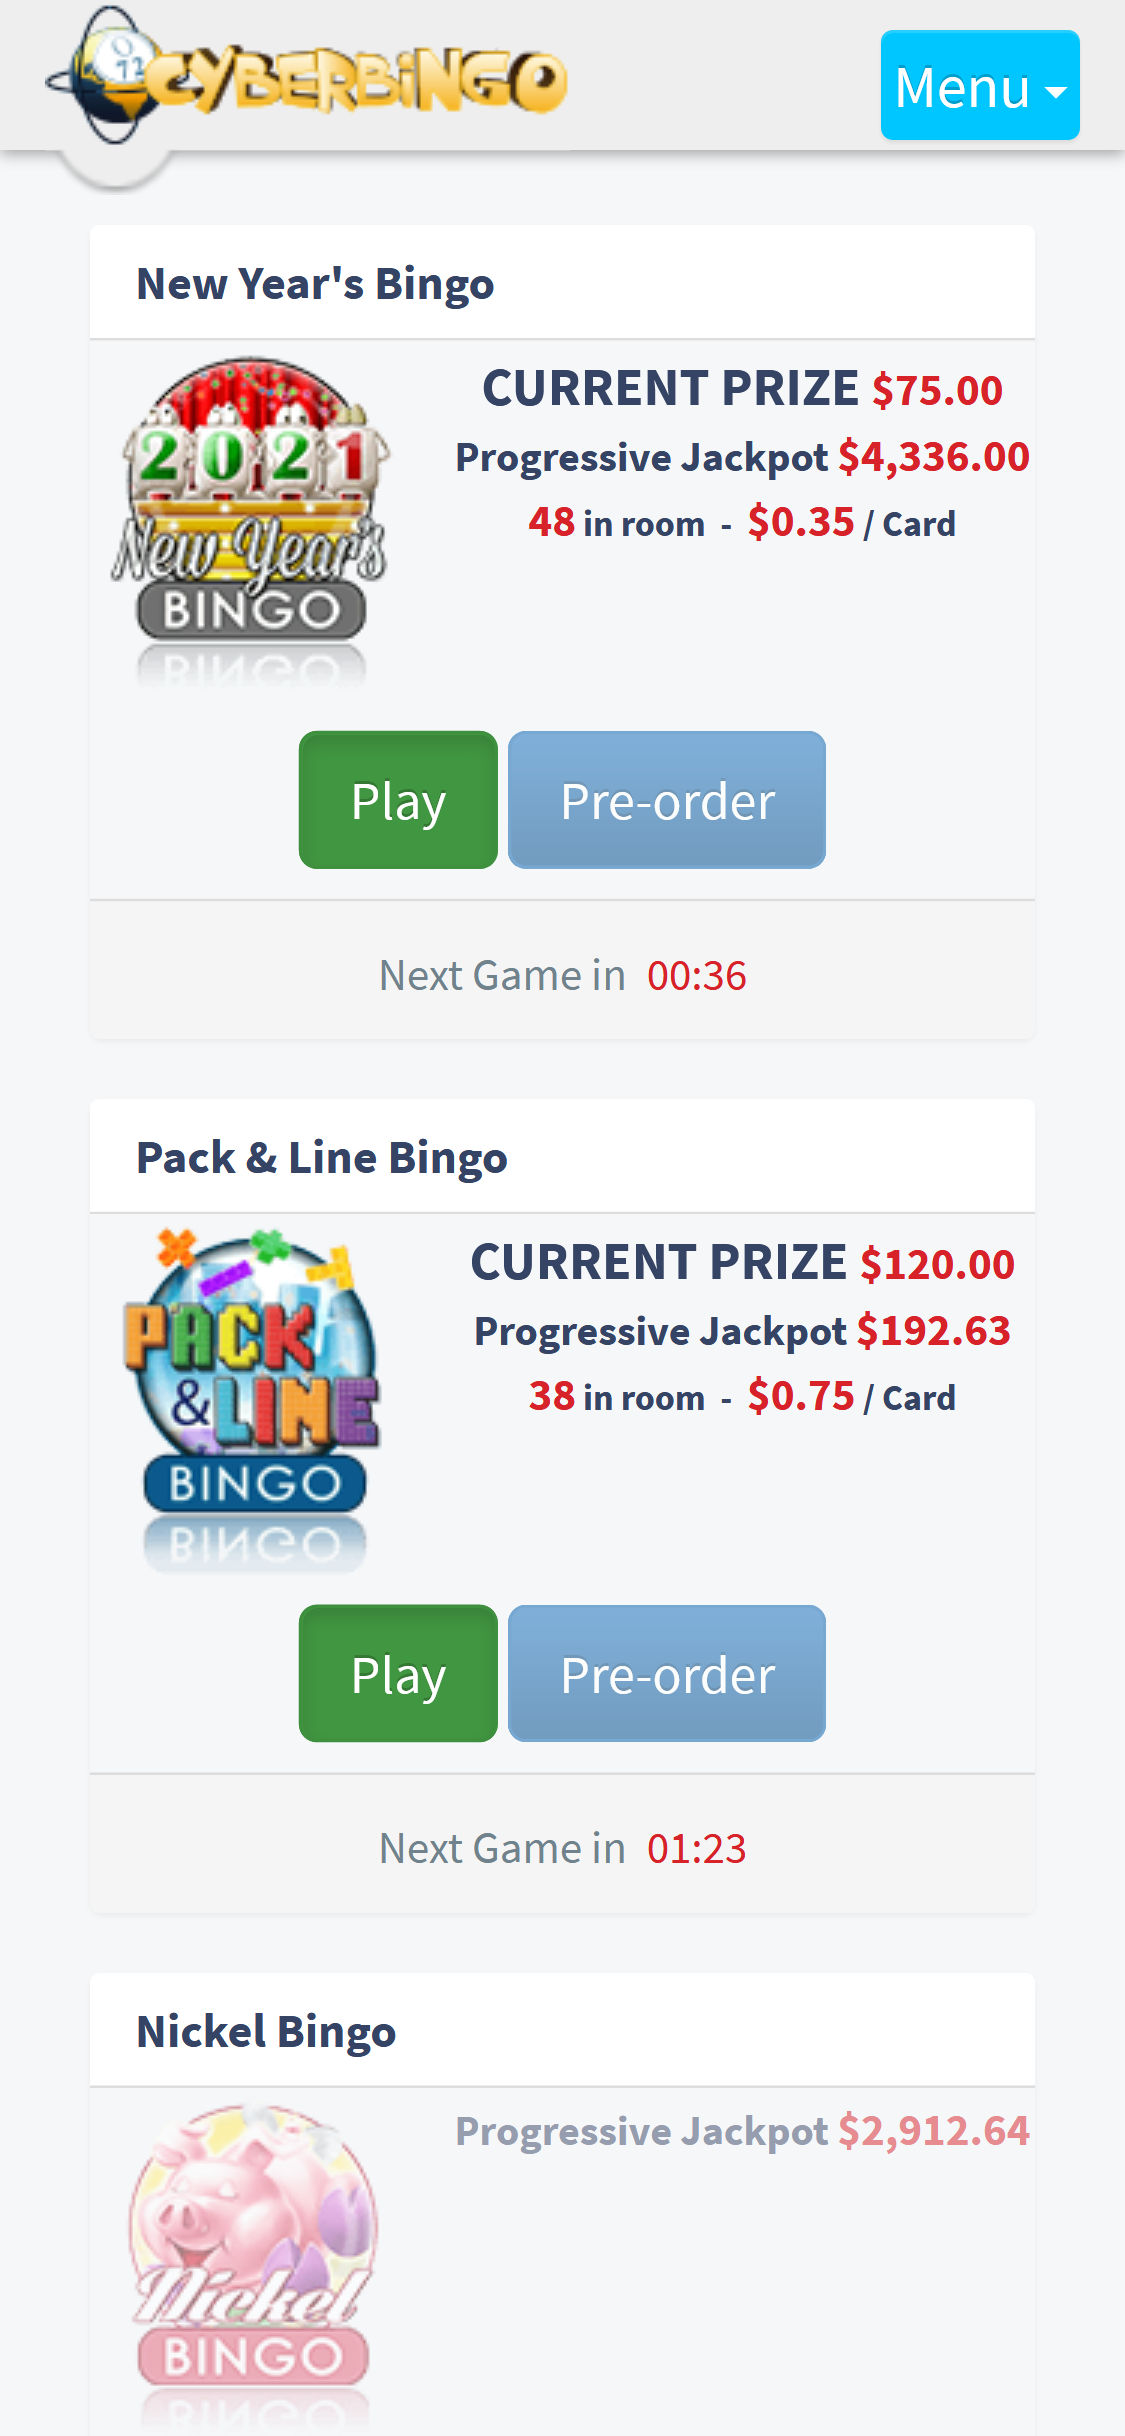 CyberBingo Casino Mobile Games Review